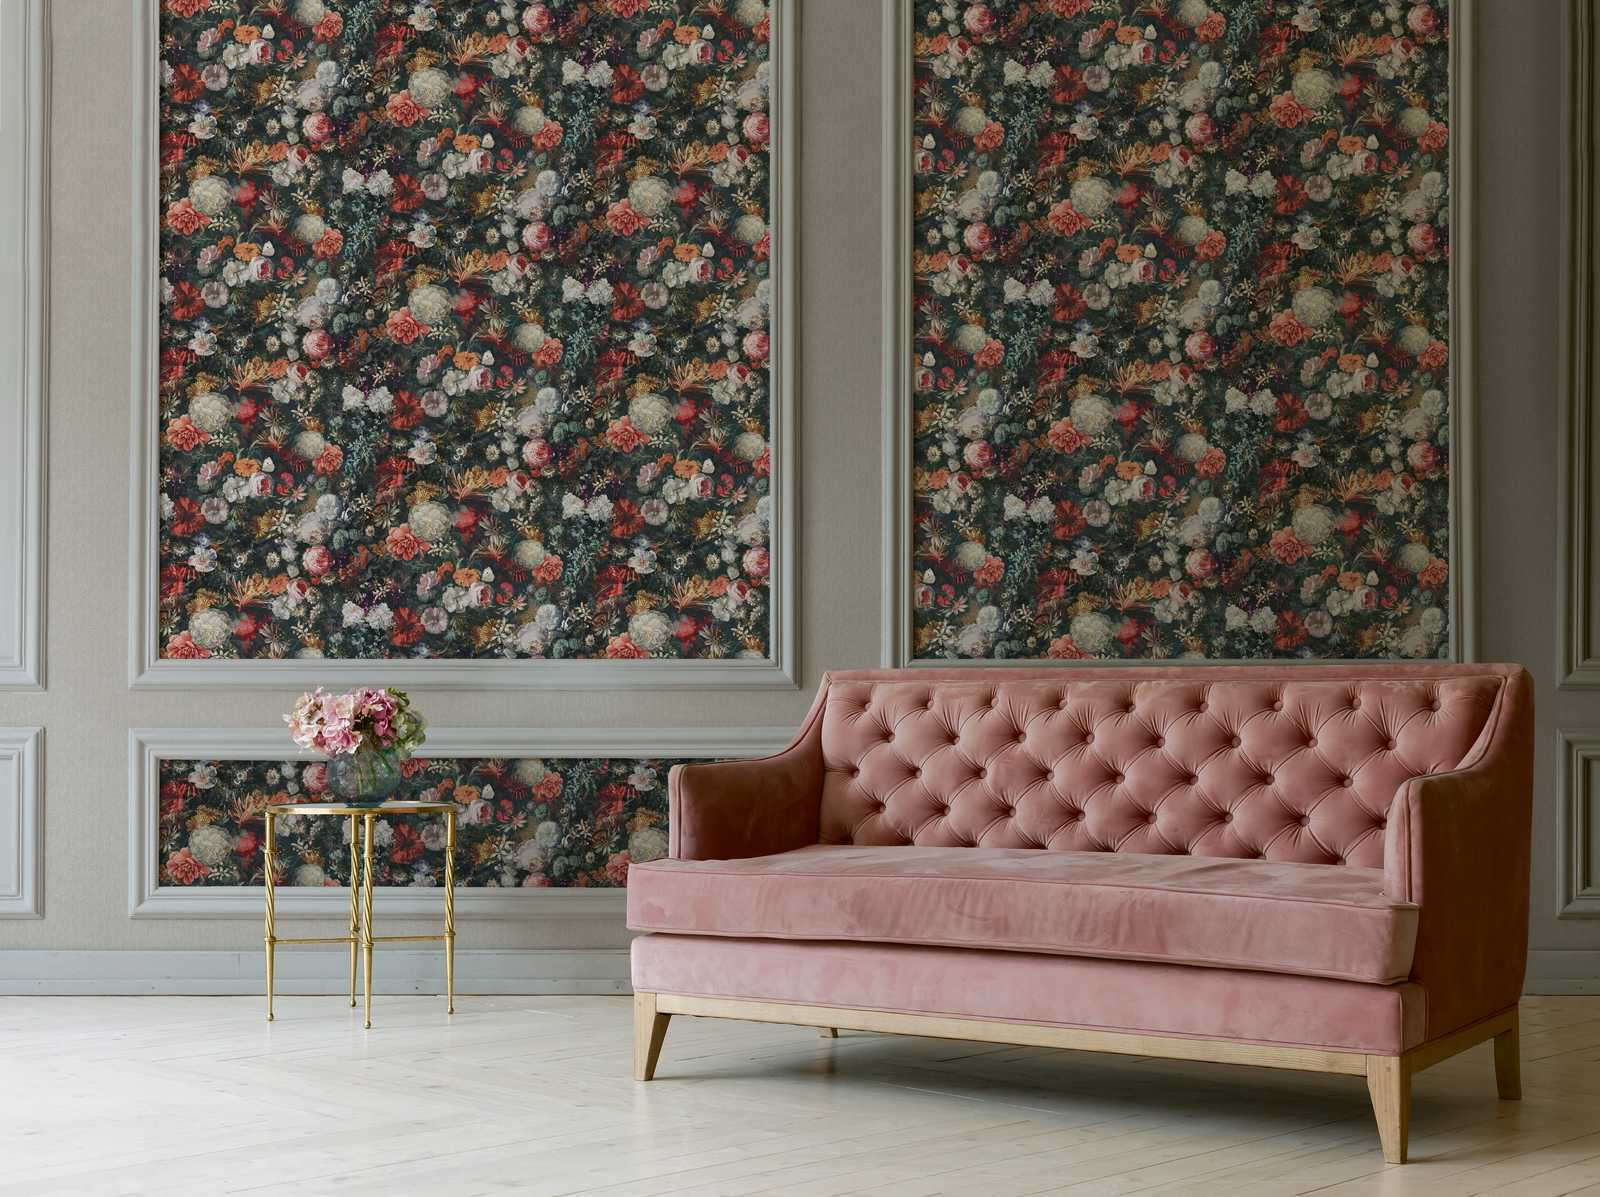             Flowers wallpaper vintage design with roses - colourful, grey, orange
        